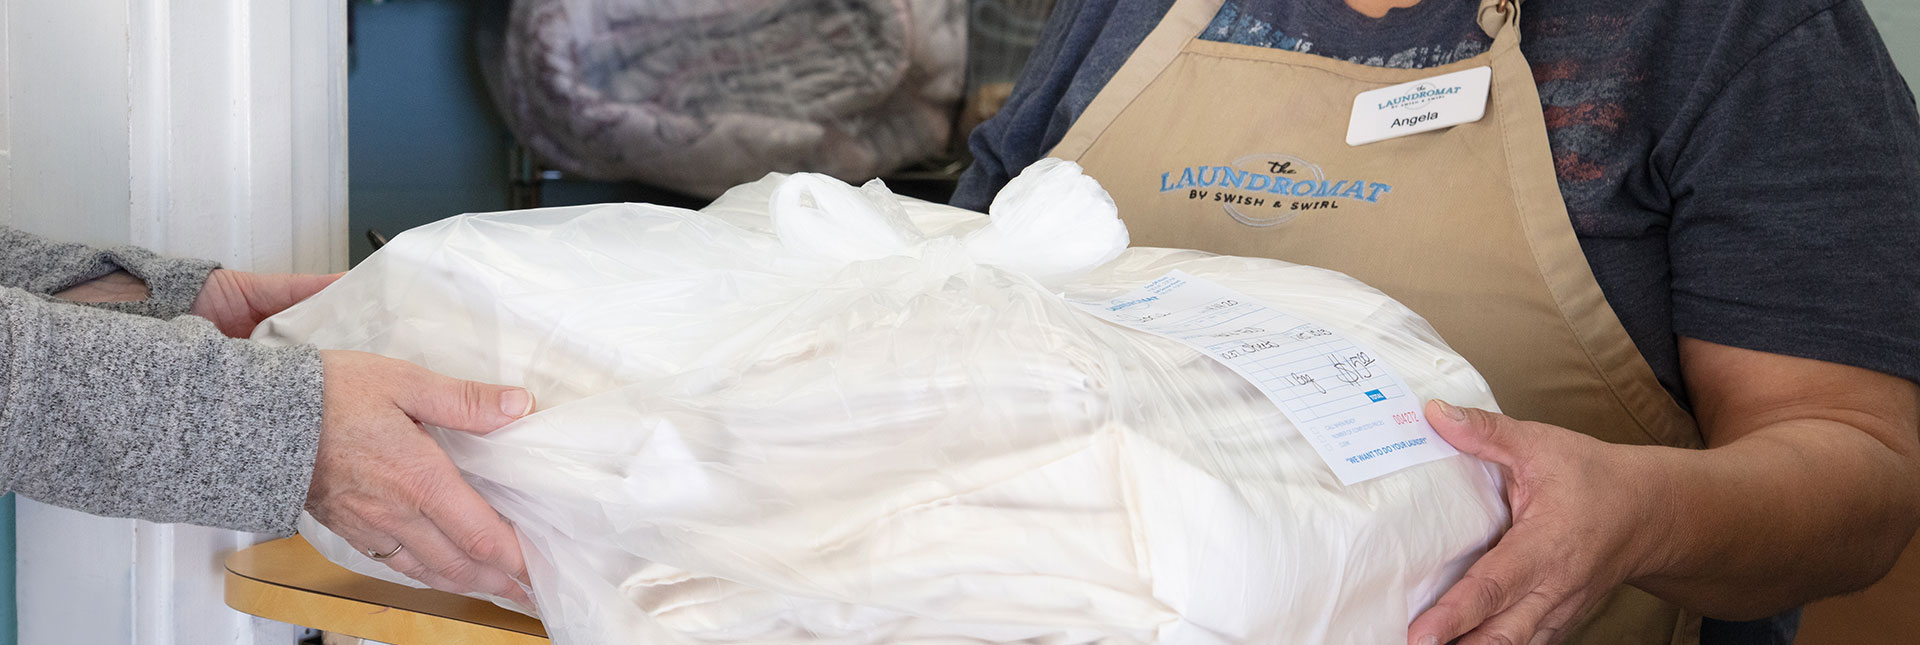 Atascadero commercial laundry service - Swish & Swirl Laundry